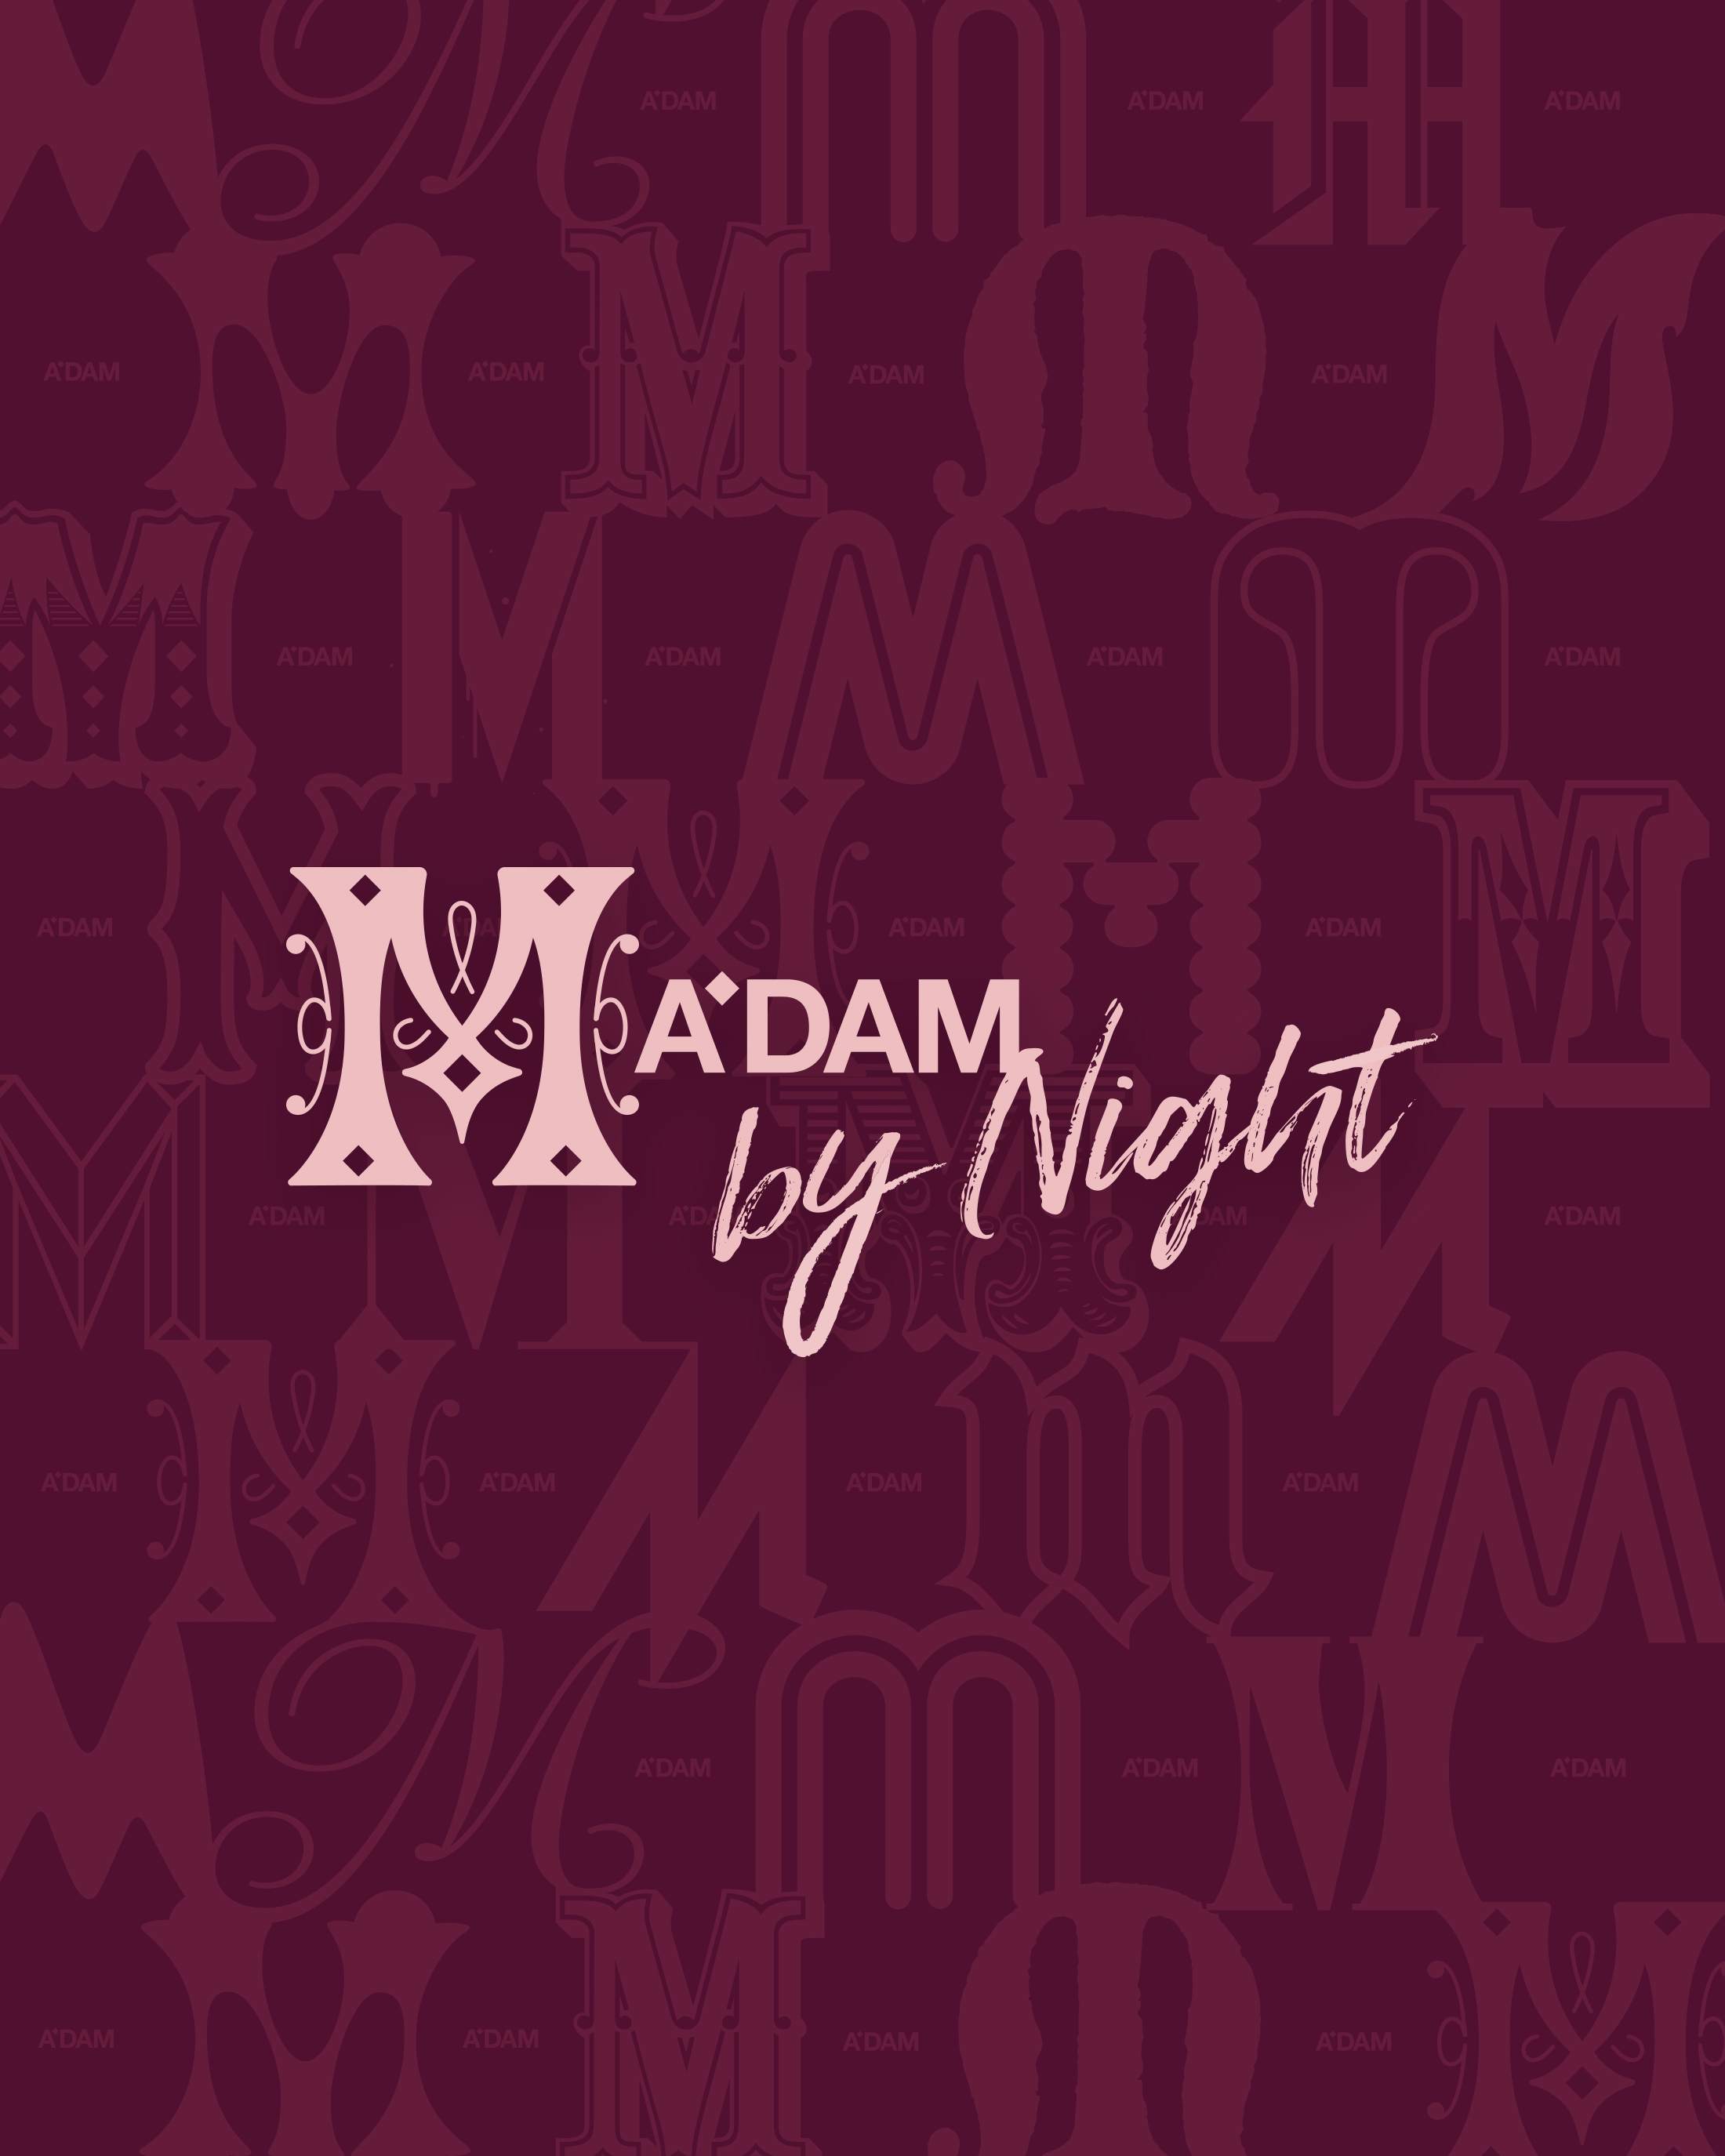 Madam by Night invites: Janick S, Steve Kennedy - フライヤー表